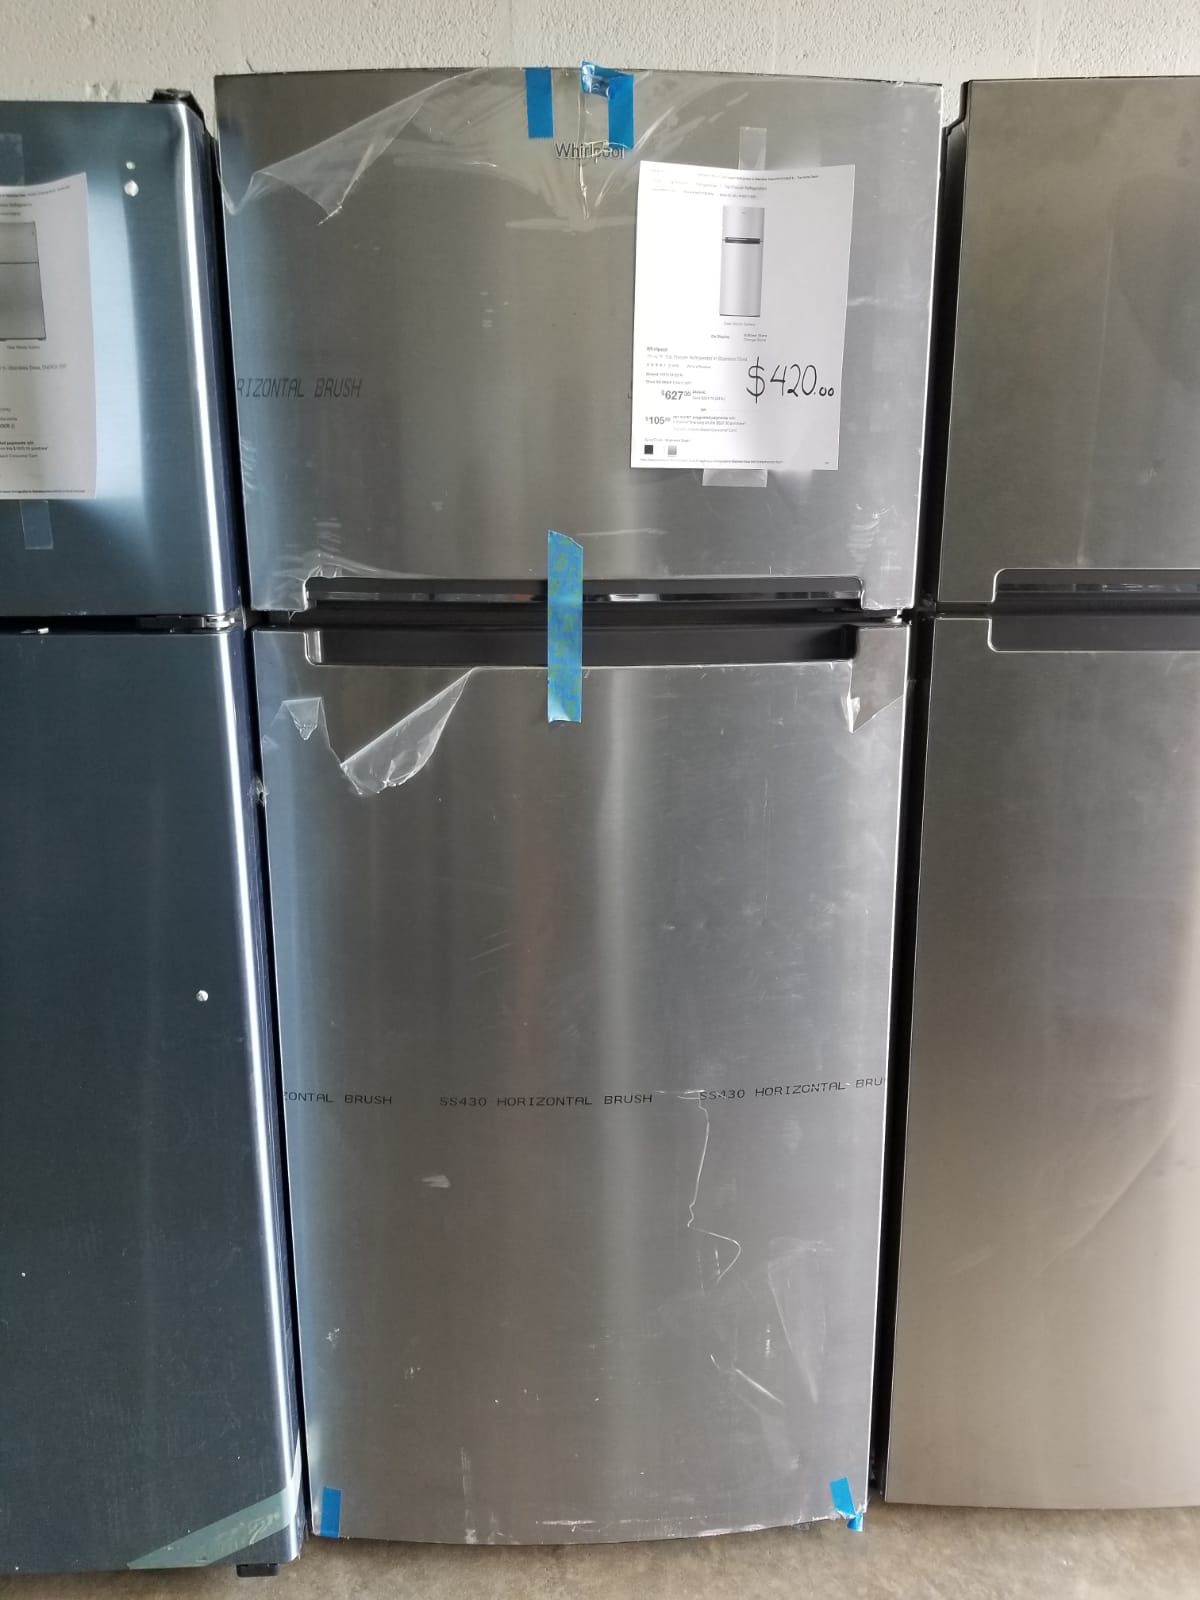 WHIRLPOOL 28” refrigerator new warranty 1 year